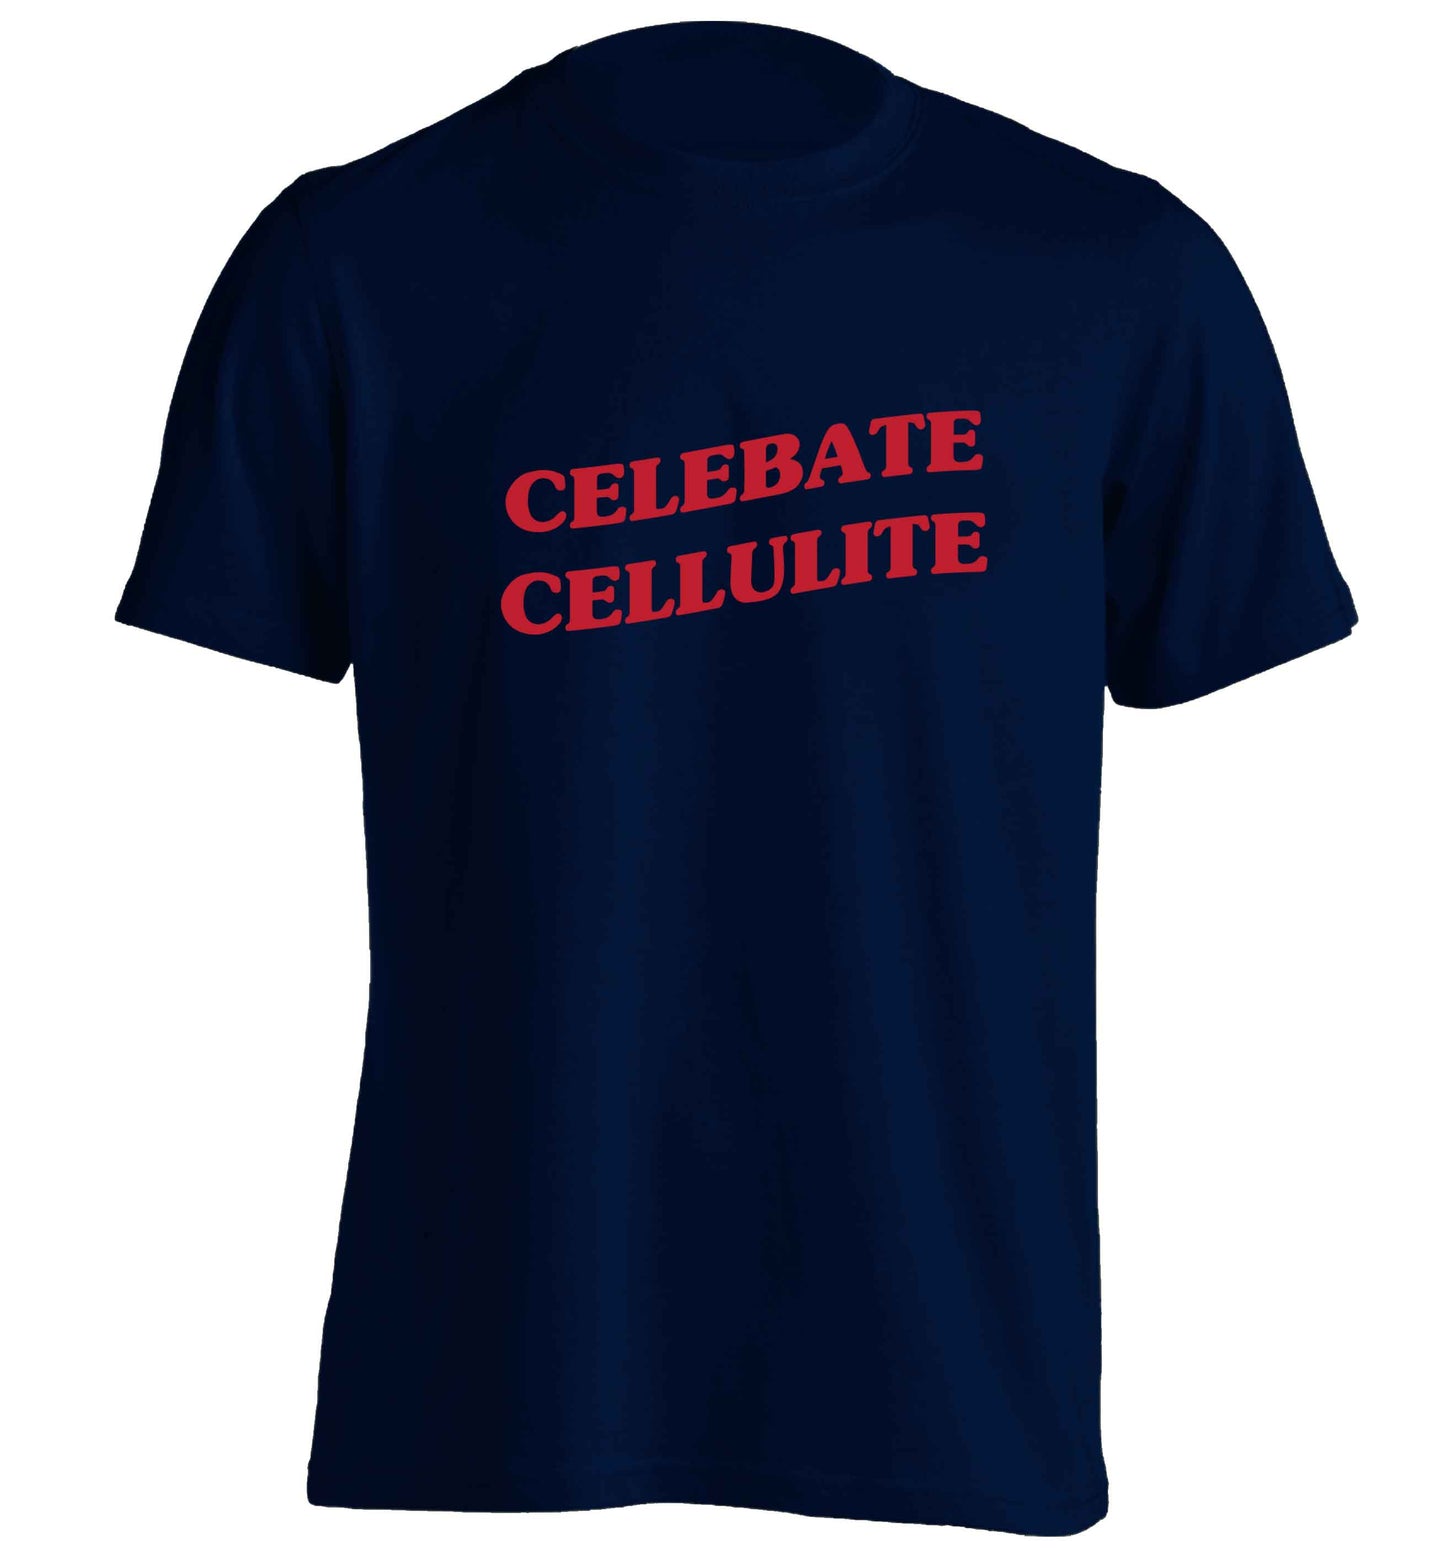 Celebrate cellulite adults unisex navy Tshirt 2XL